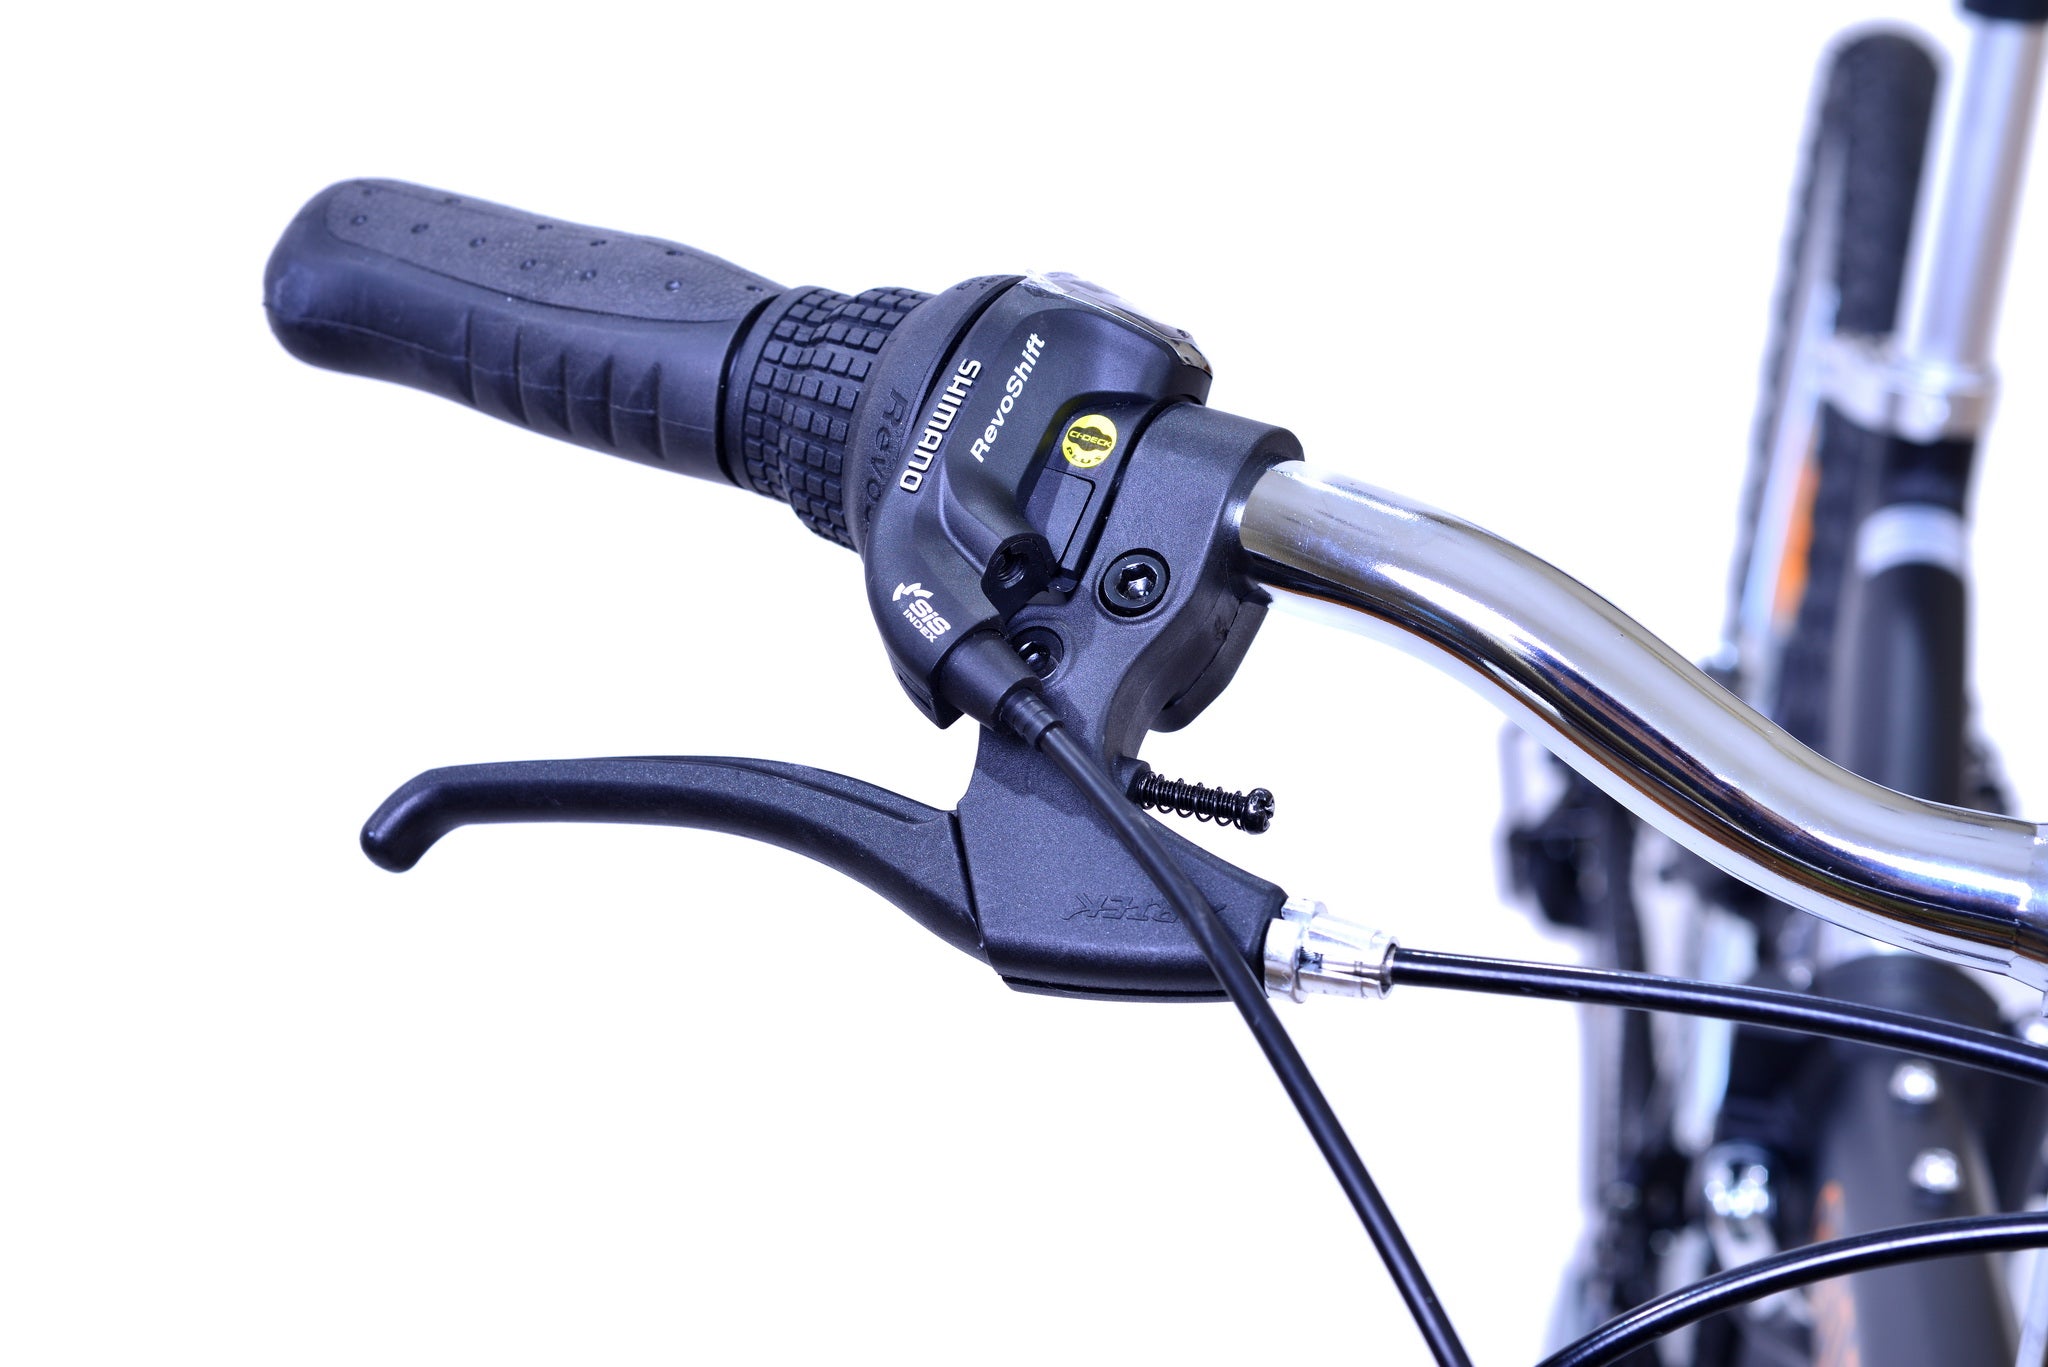 Right handlebar of a bike with a brake and Shimano gearshift, RevoShift.